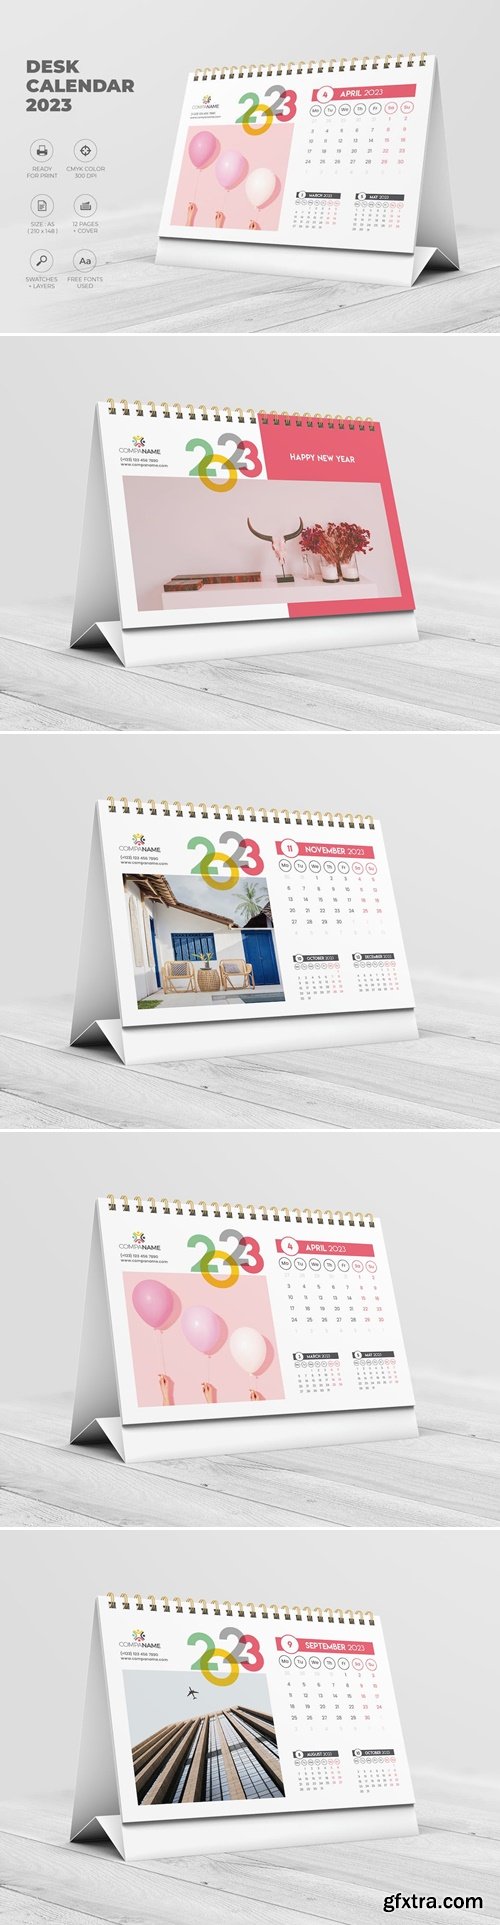 Creative Desk Calendar 2023 HP65R32